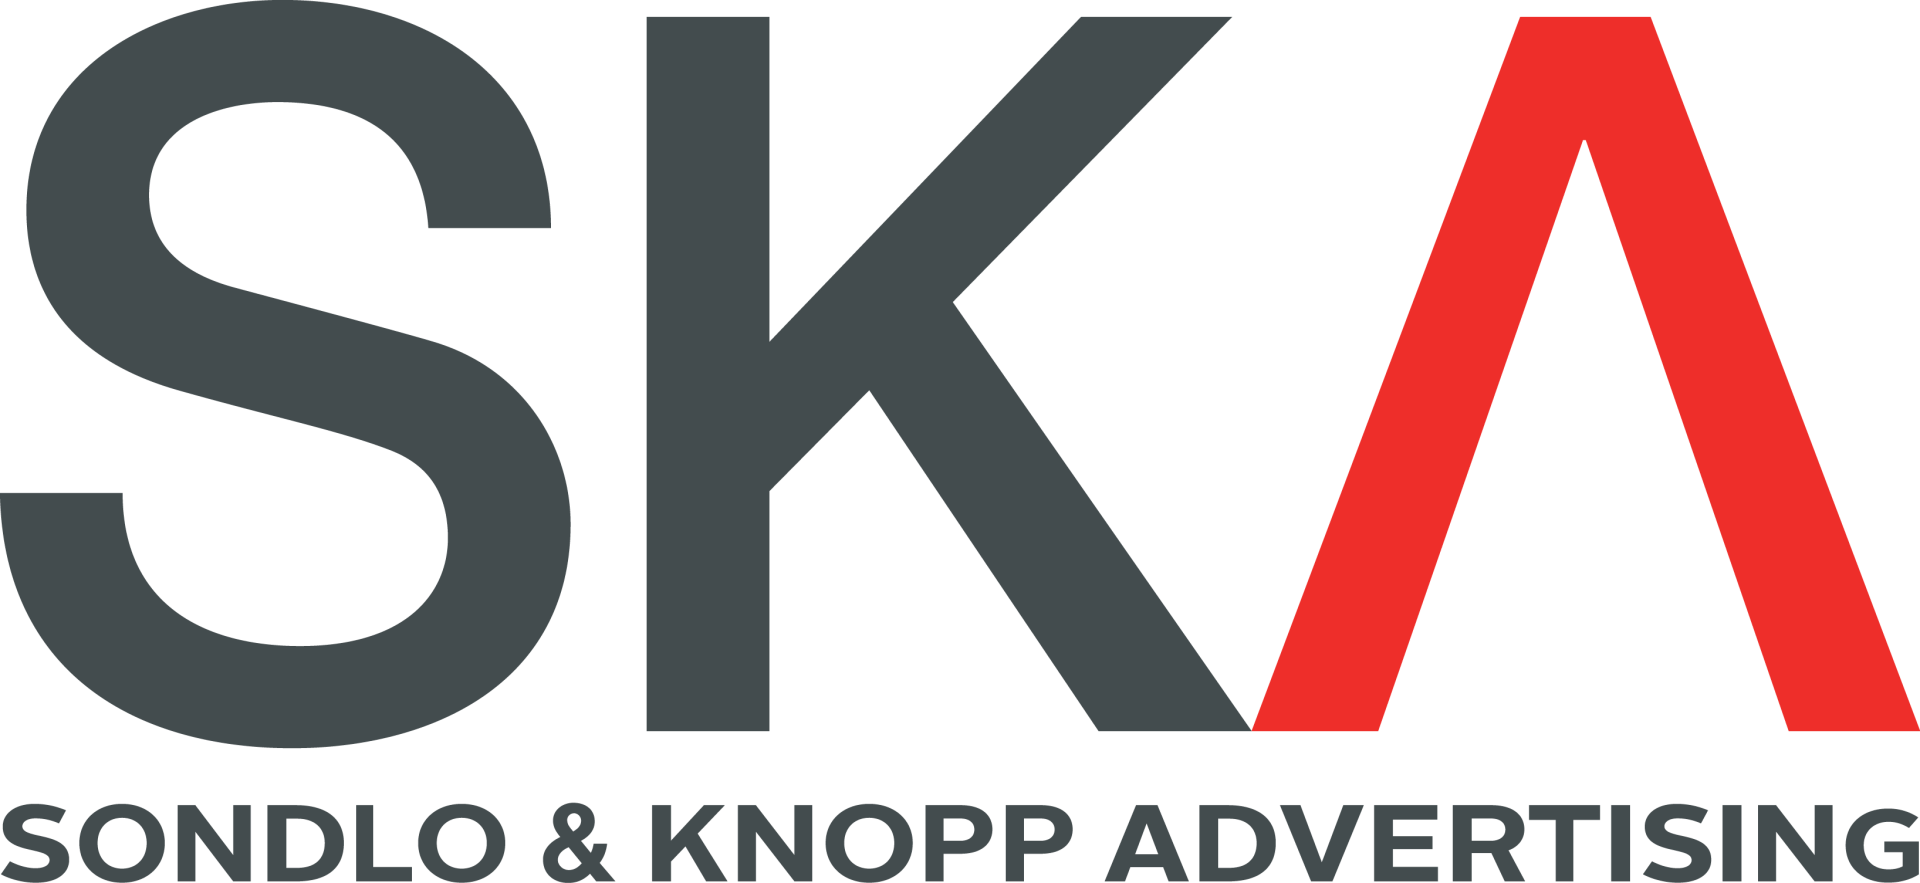 Sondlo & Knopp Advertising Agency